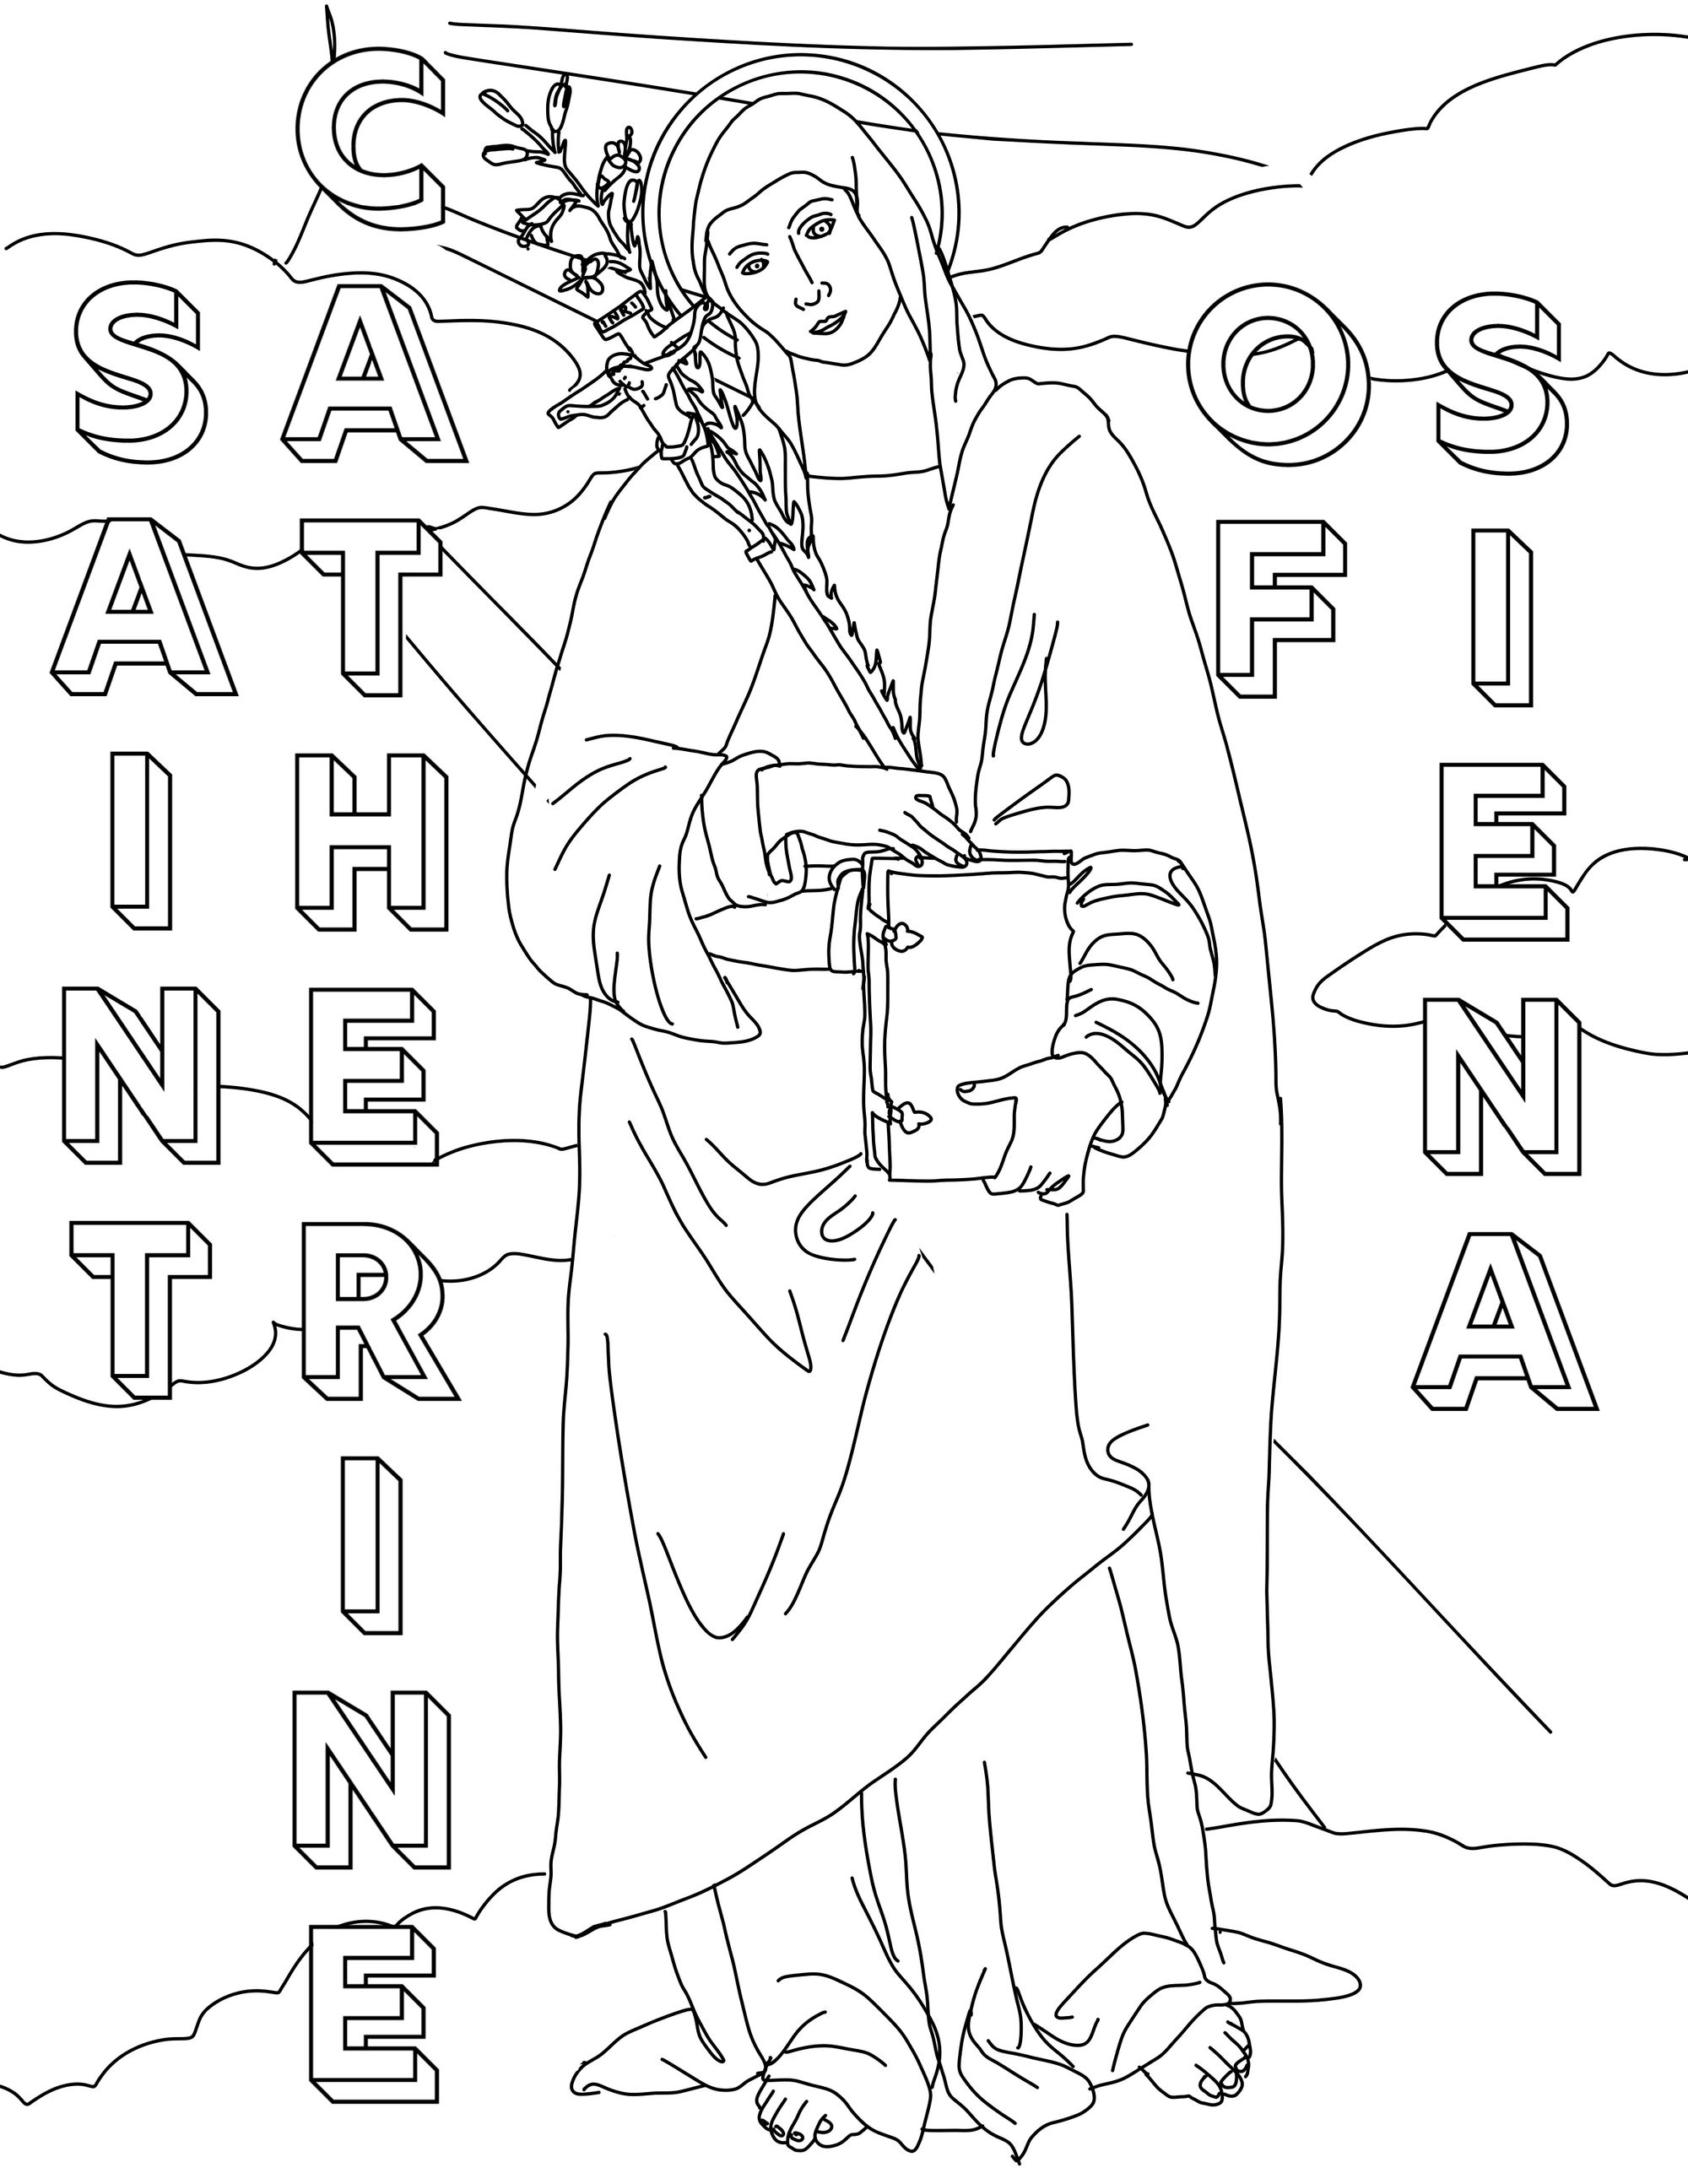 Saint Catherine of Siena - Catholic Coloring Page